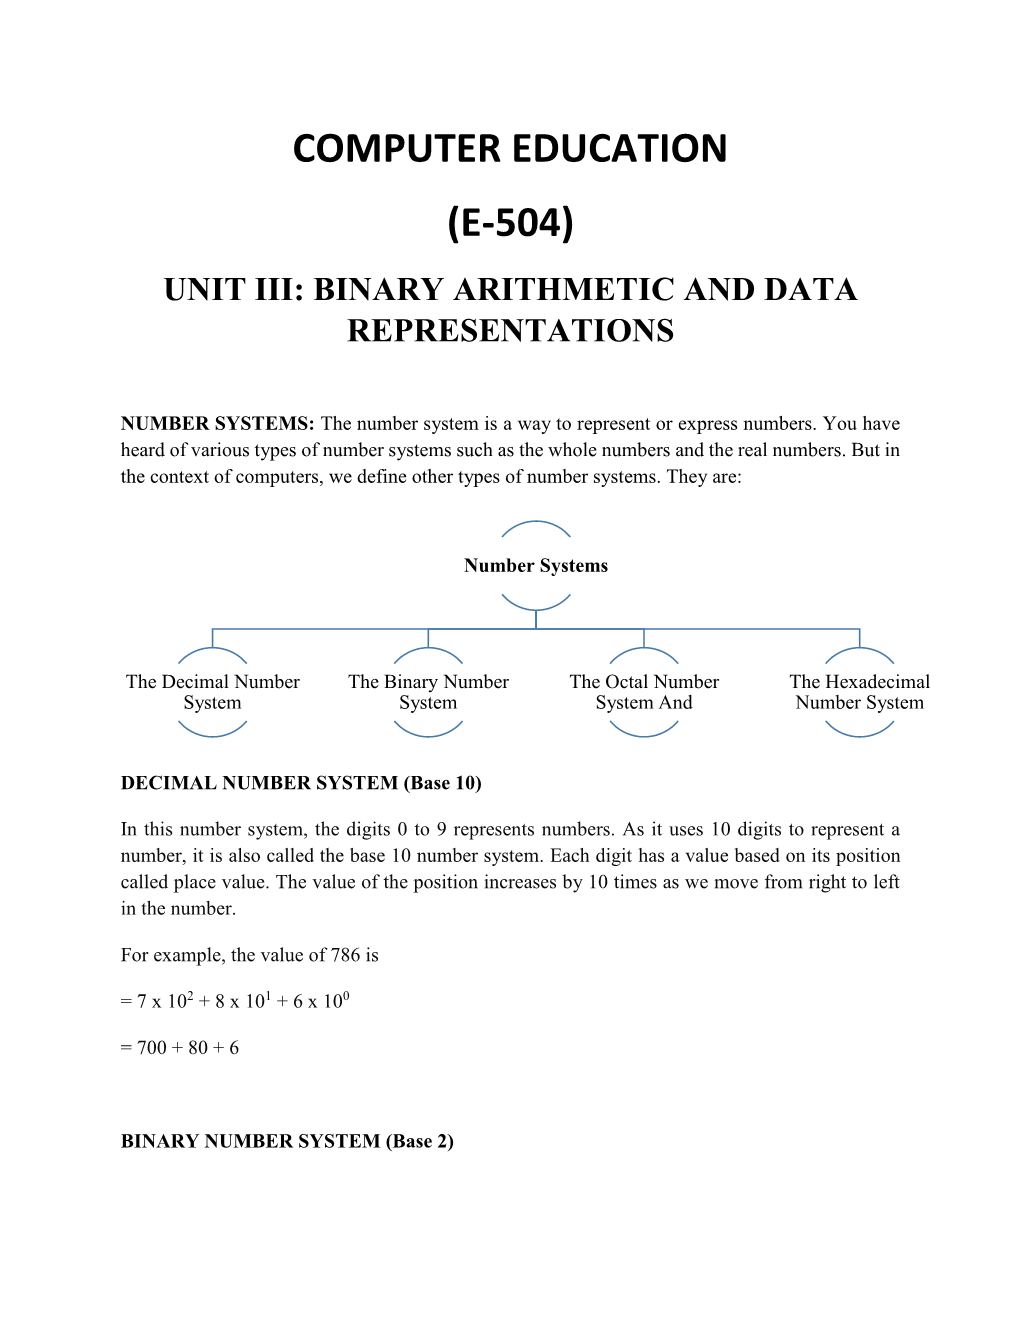 Computer Education (E-504) Unit Iii: Binary Arithmetic and Data Representations